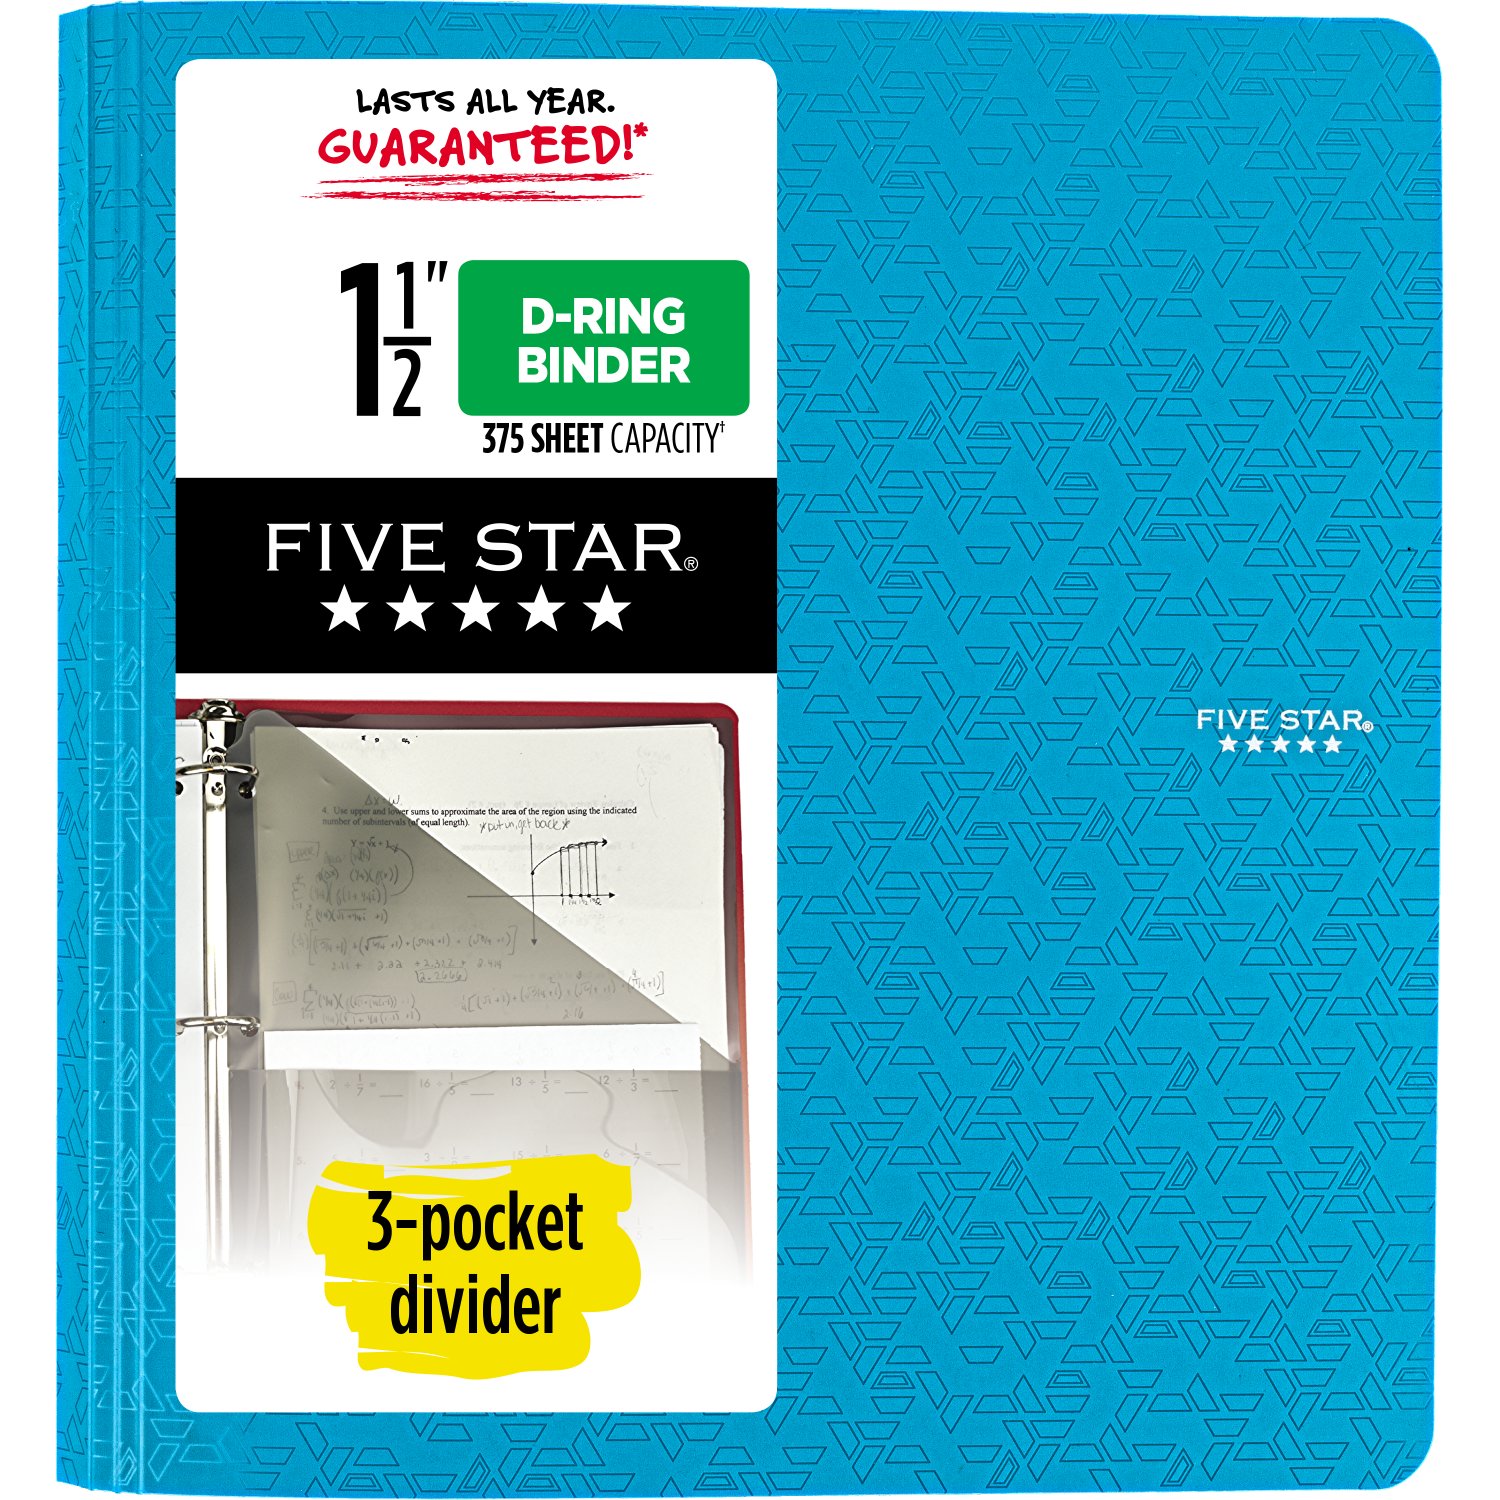 Five Star 1 1/2" Plastic Binder